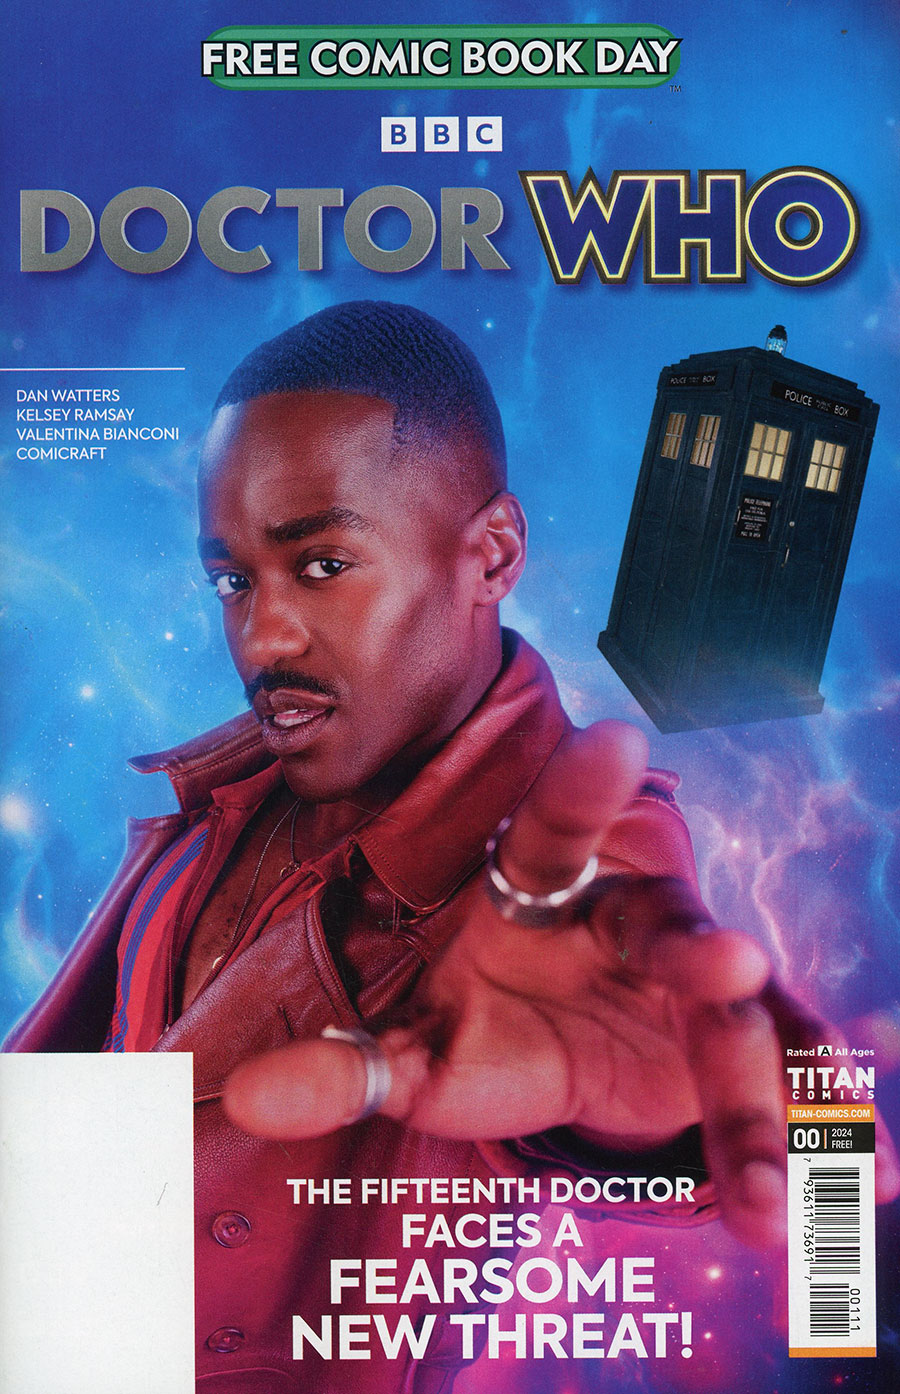 FCBD 2024 Doctor Who 15th Doctor - FREE - Limit 1 Per Customer